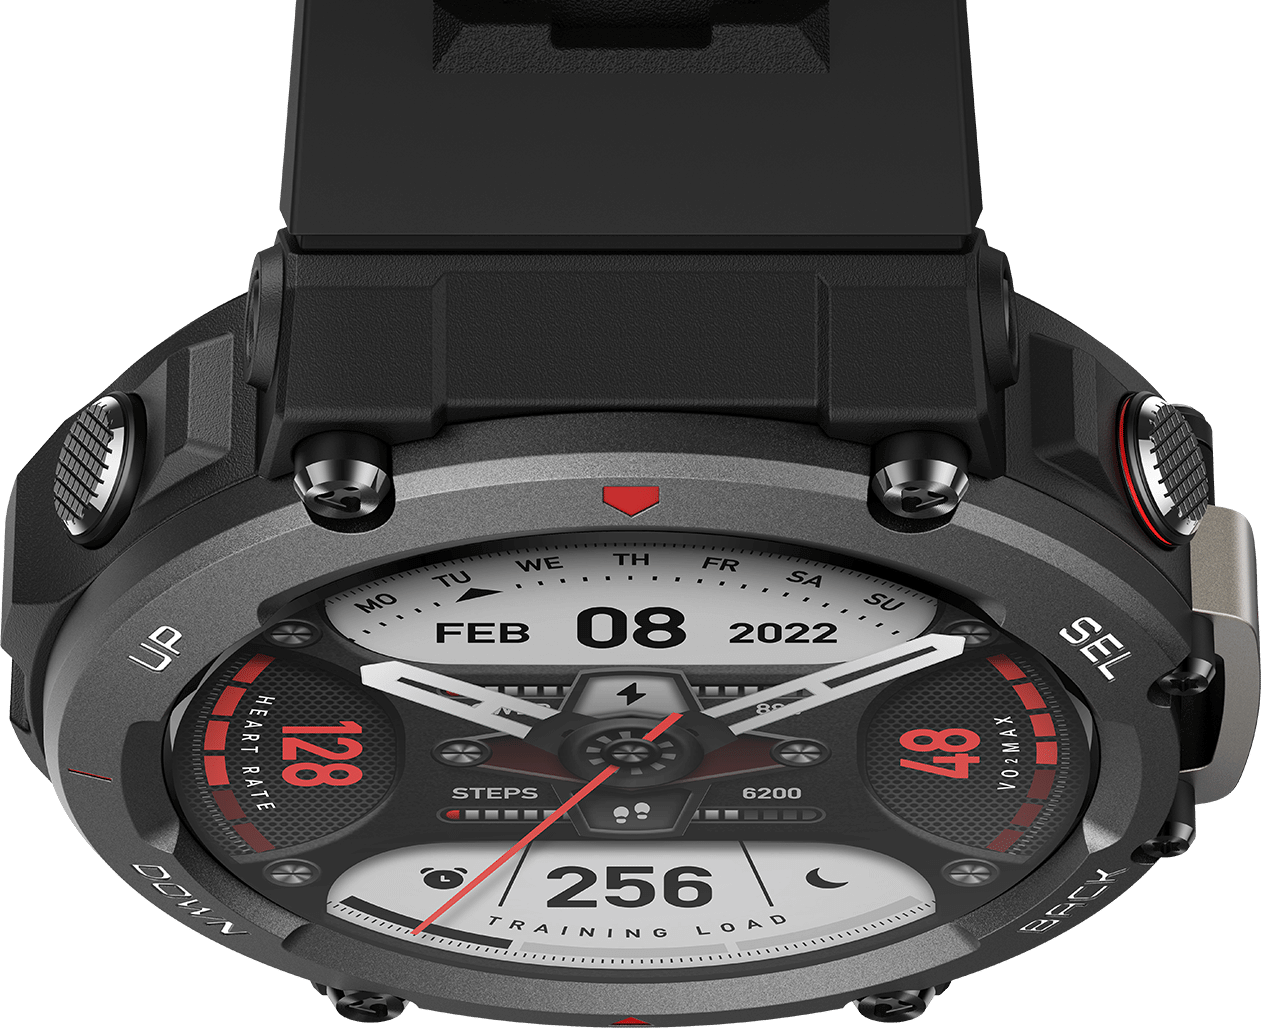 Amazfit T-Rex 2 Smart Watch for Men, Dual-Band & 6 Satellite Positioning,  850037656622